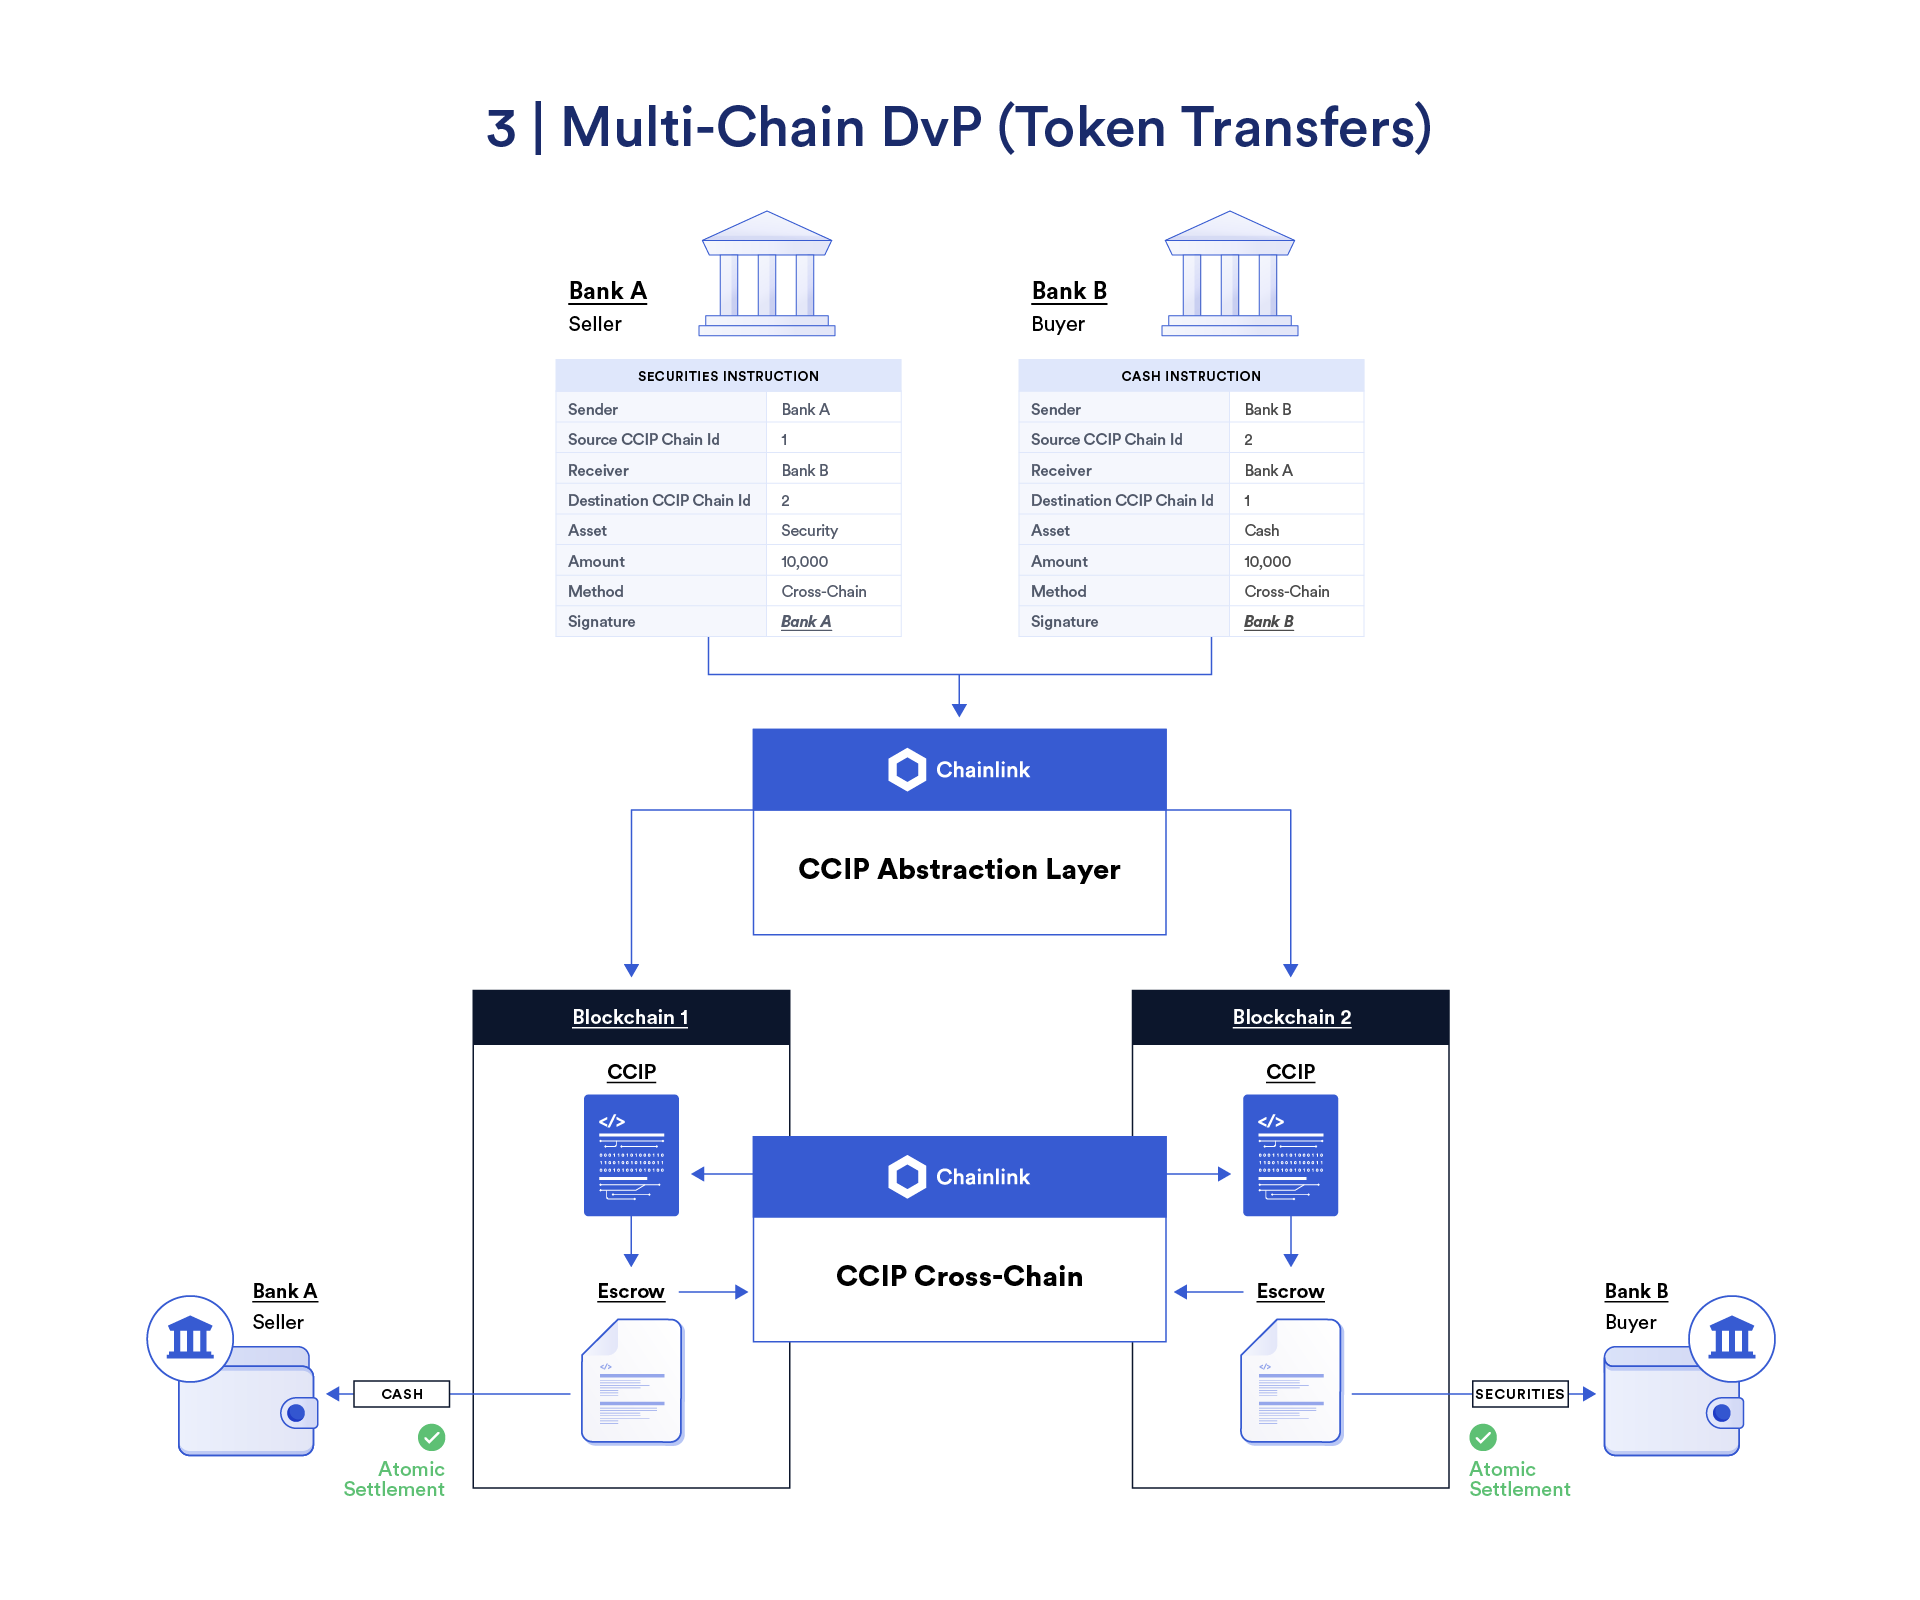 Multi-chain DvP using Chainlink CCIP for token transfers.